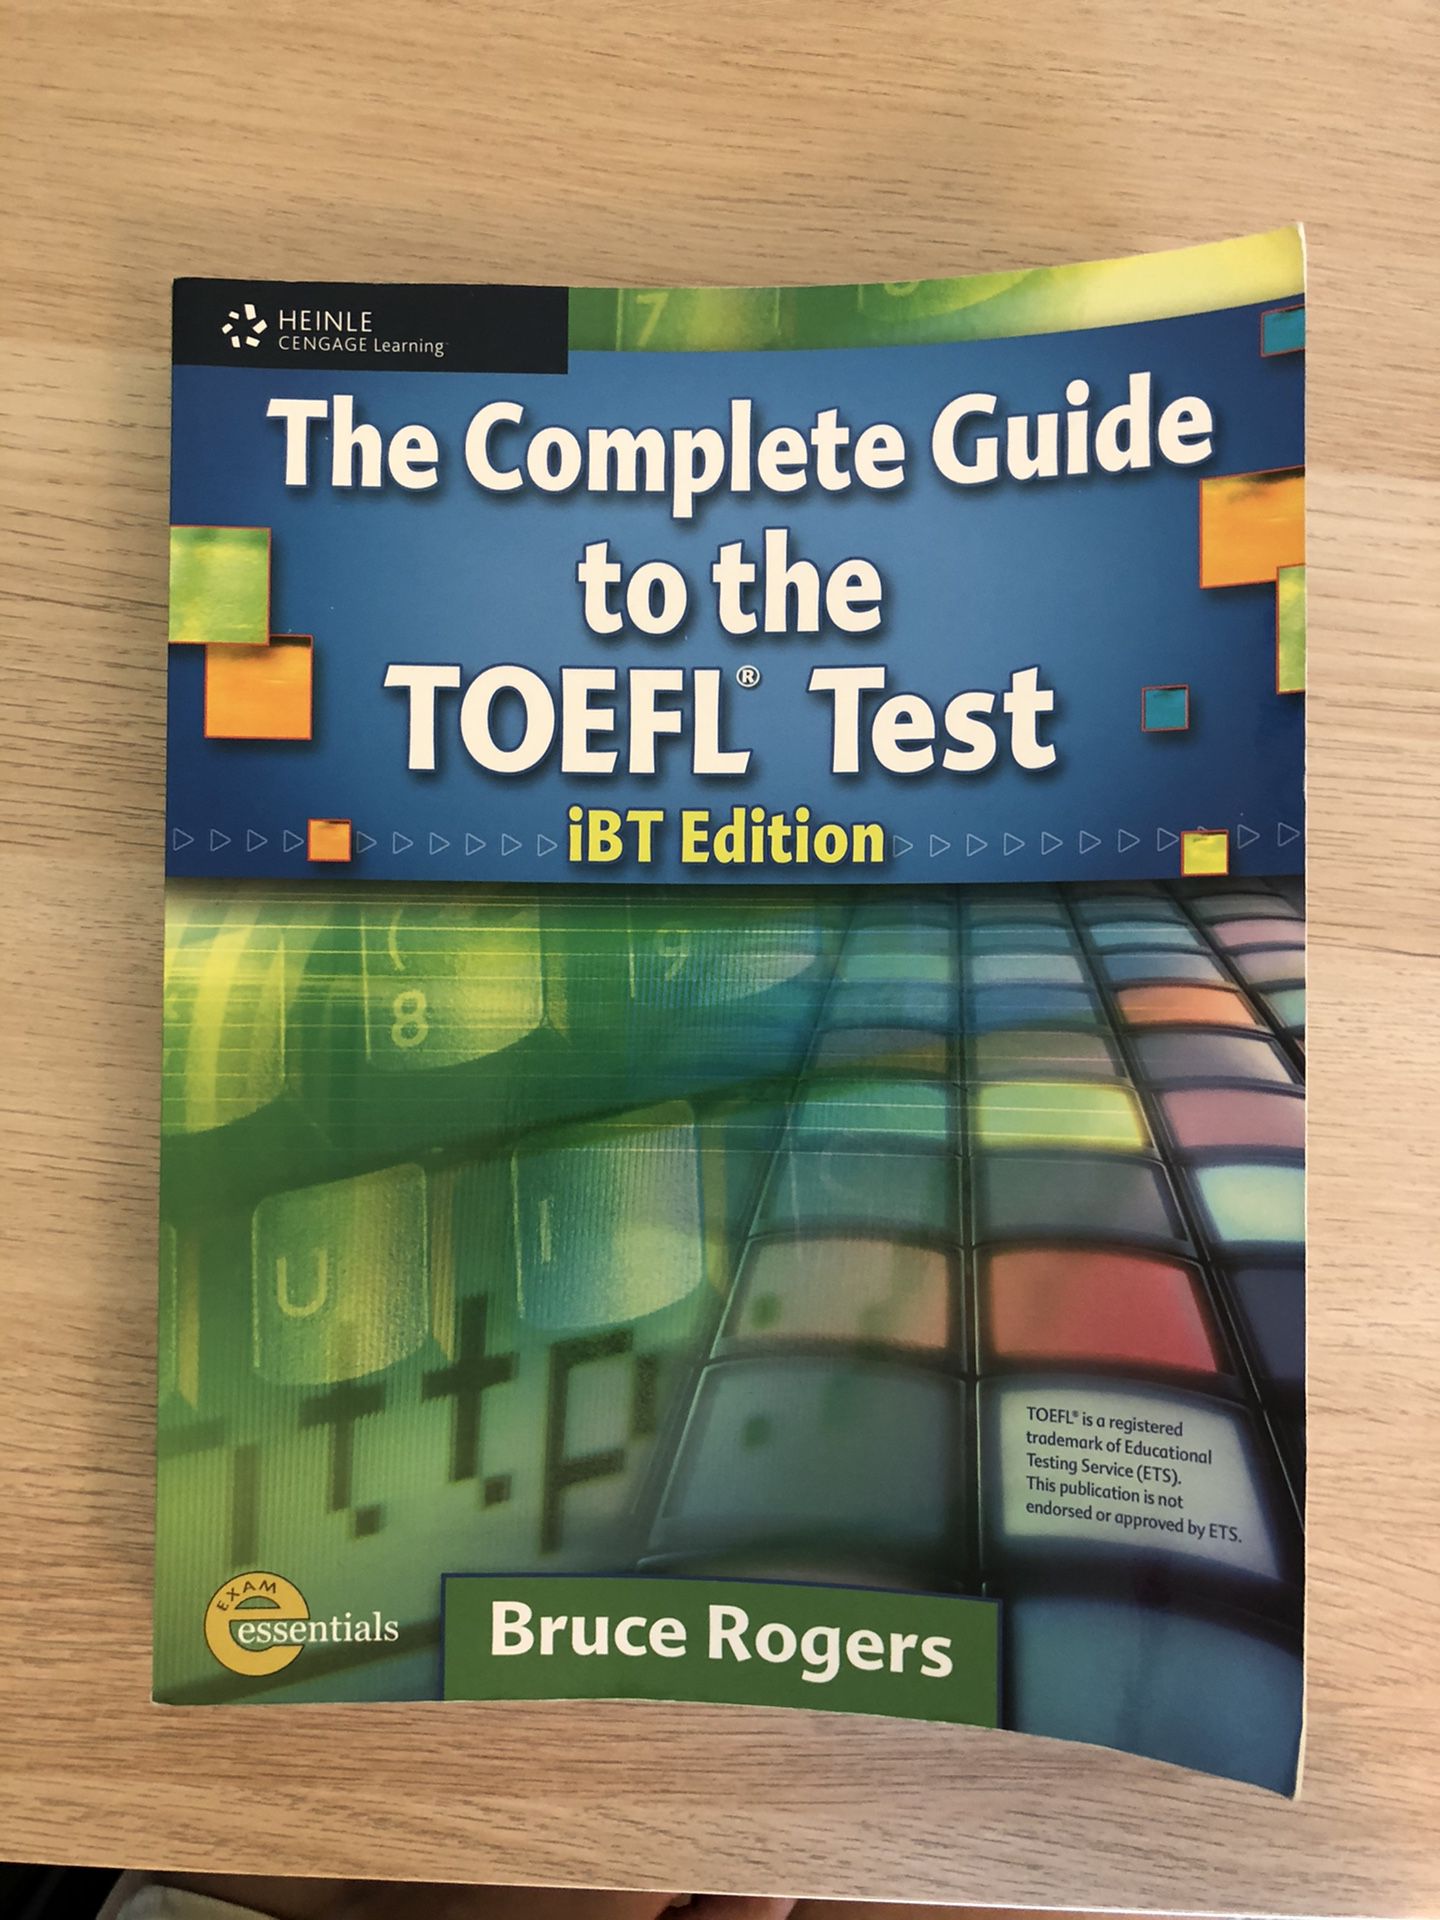 Toefl test